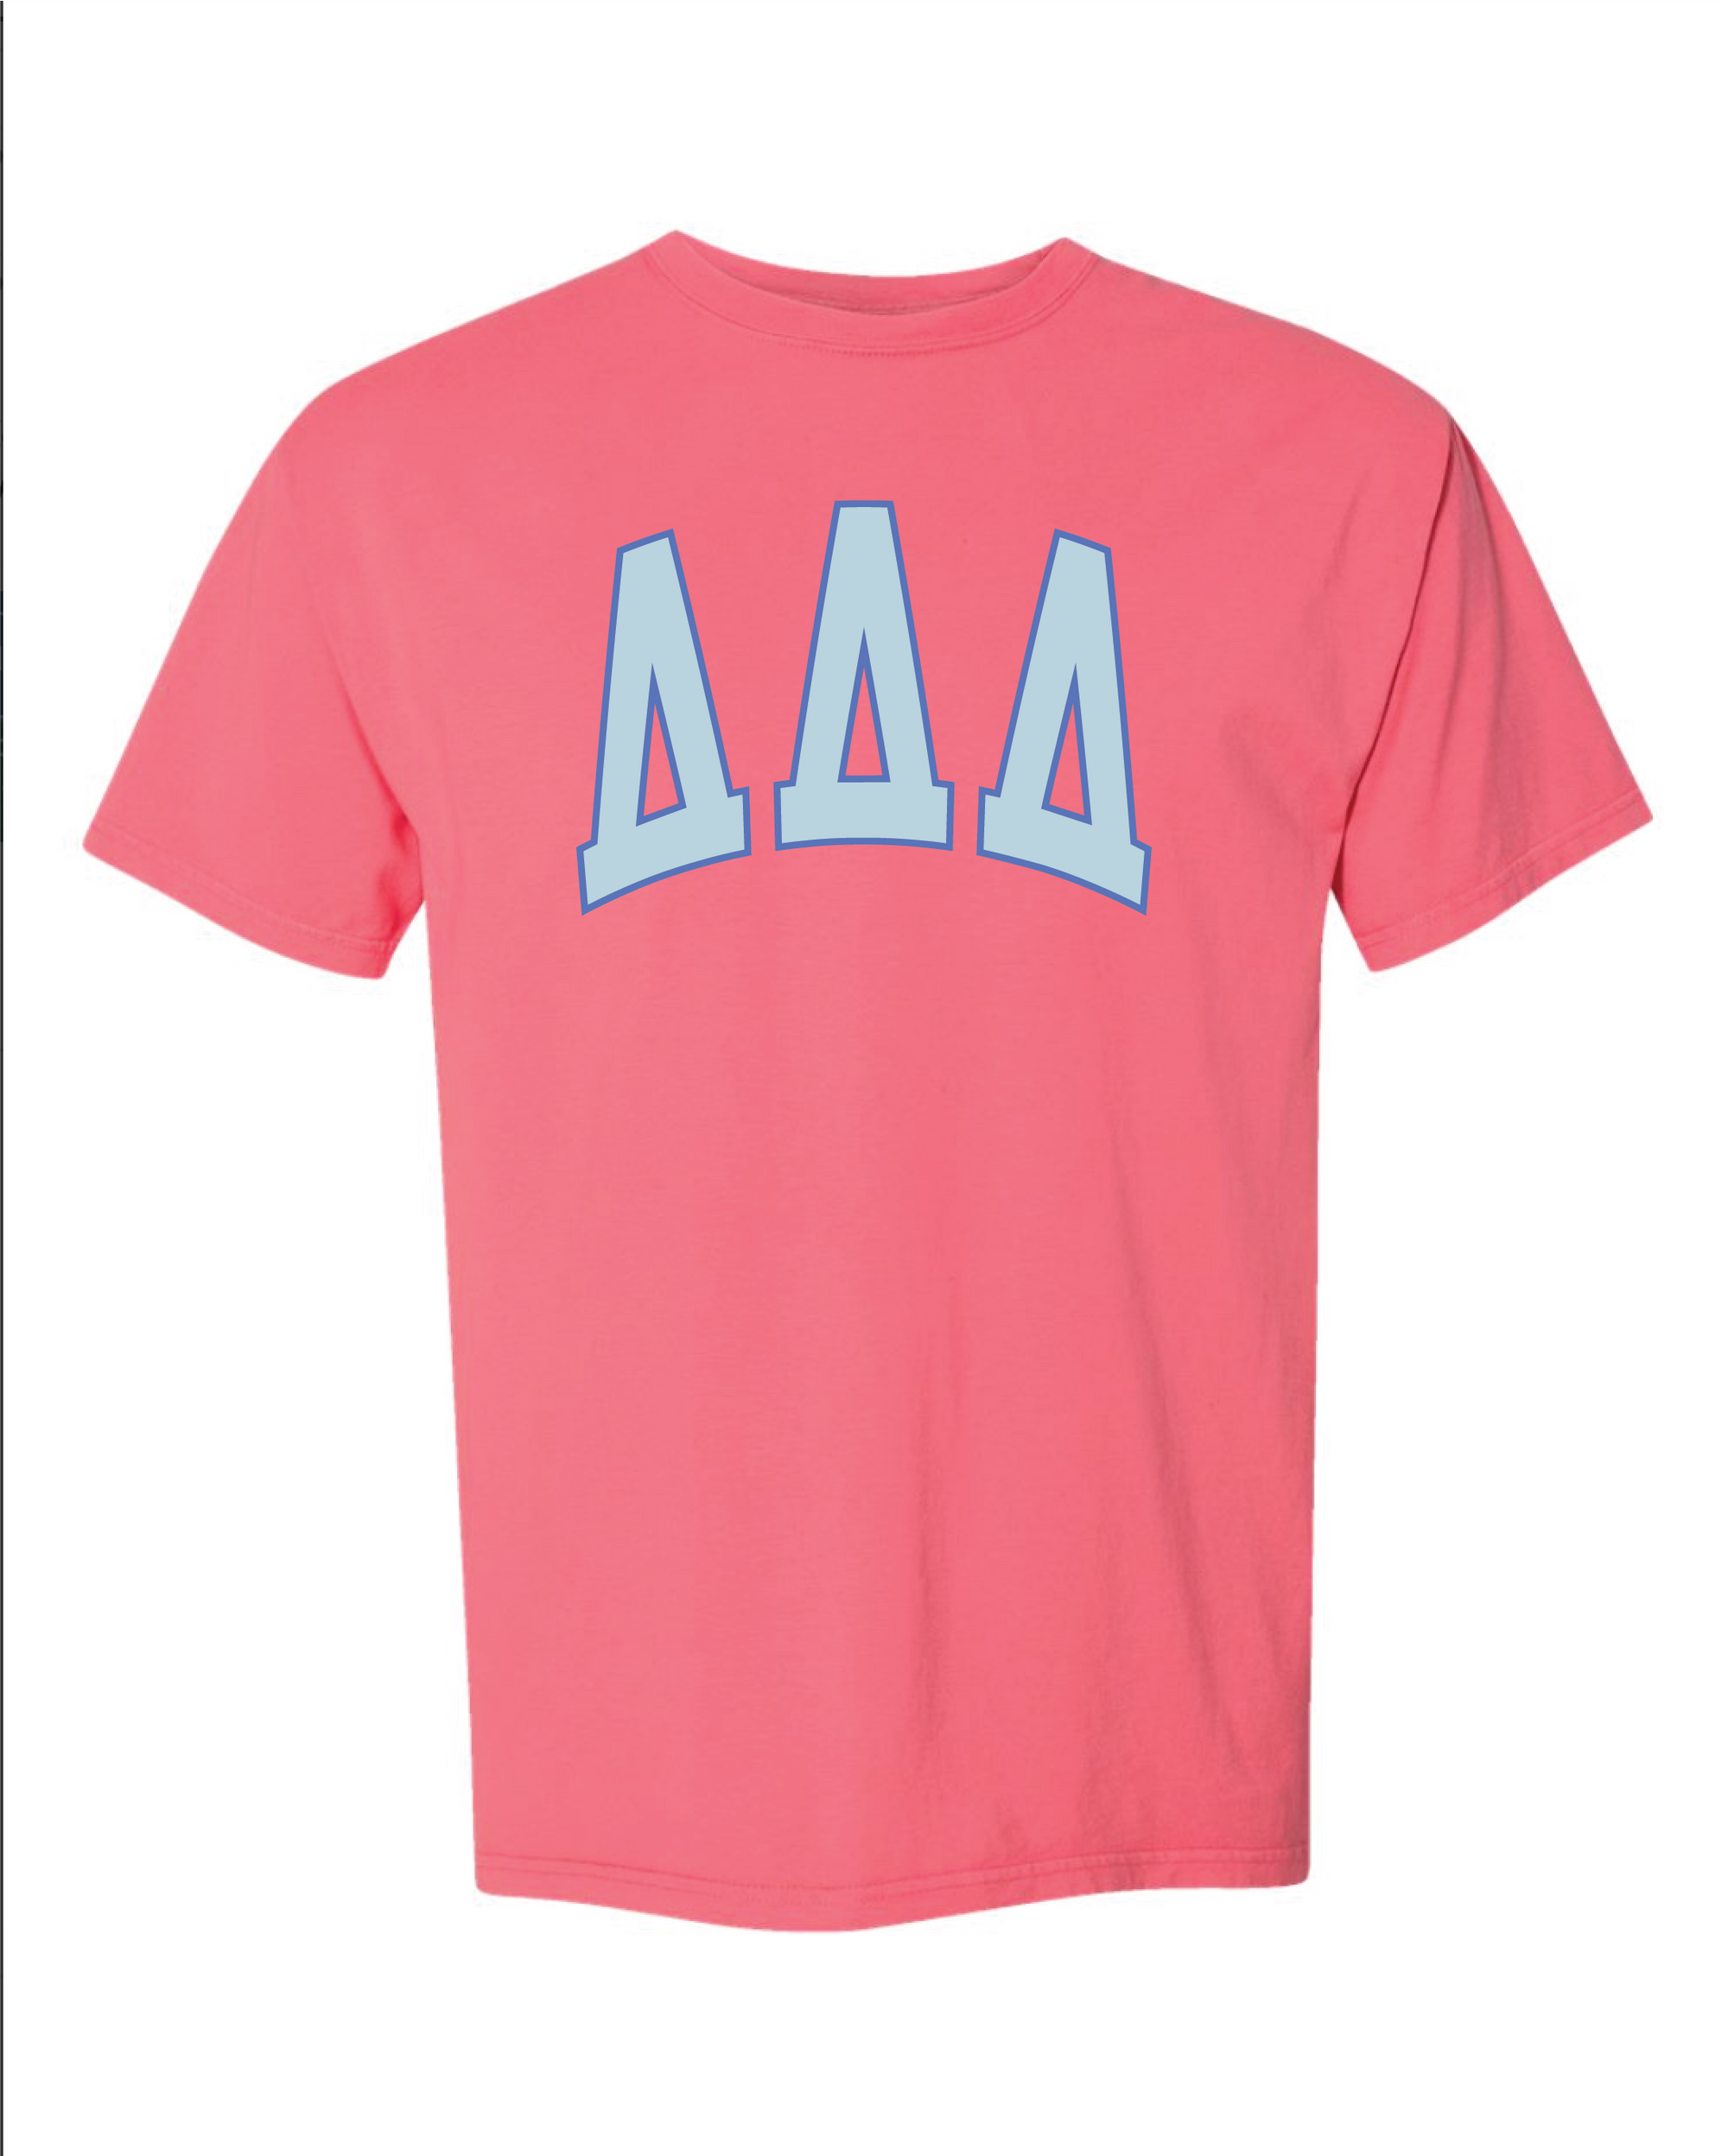 Tri Delta Varsity Letters Tshirt